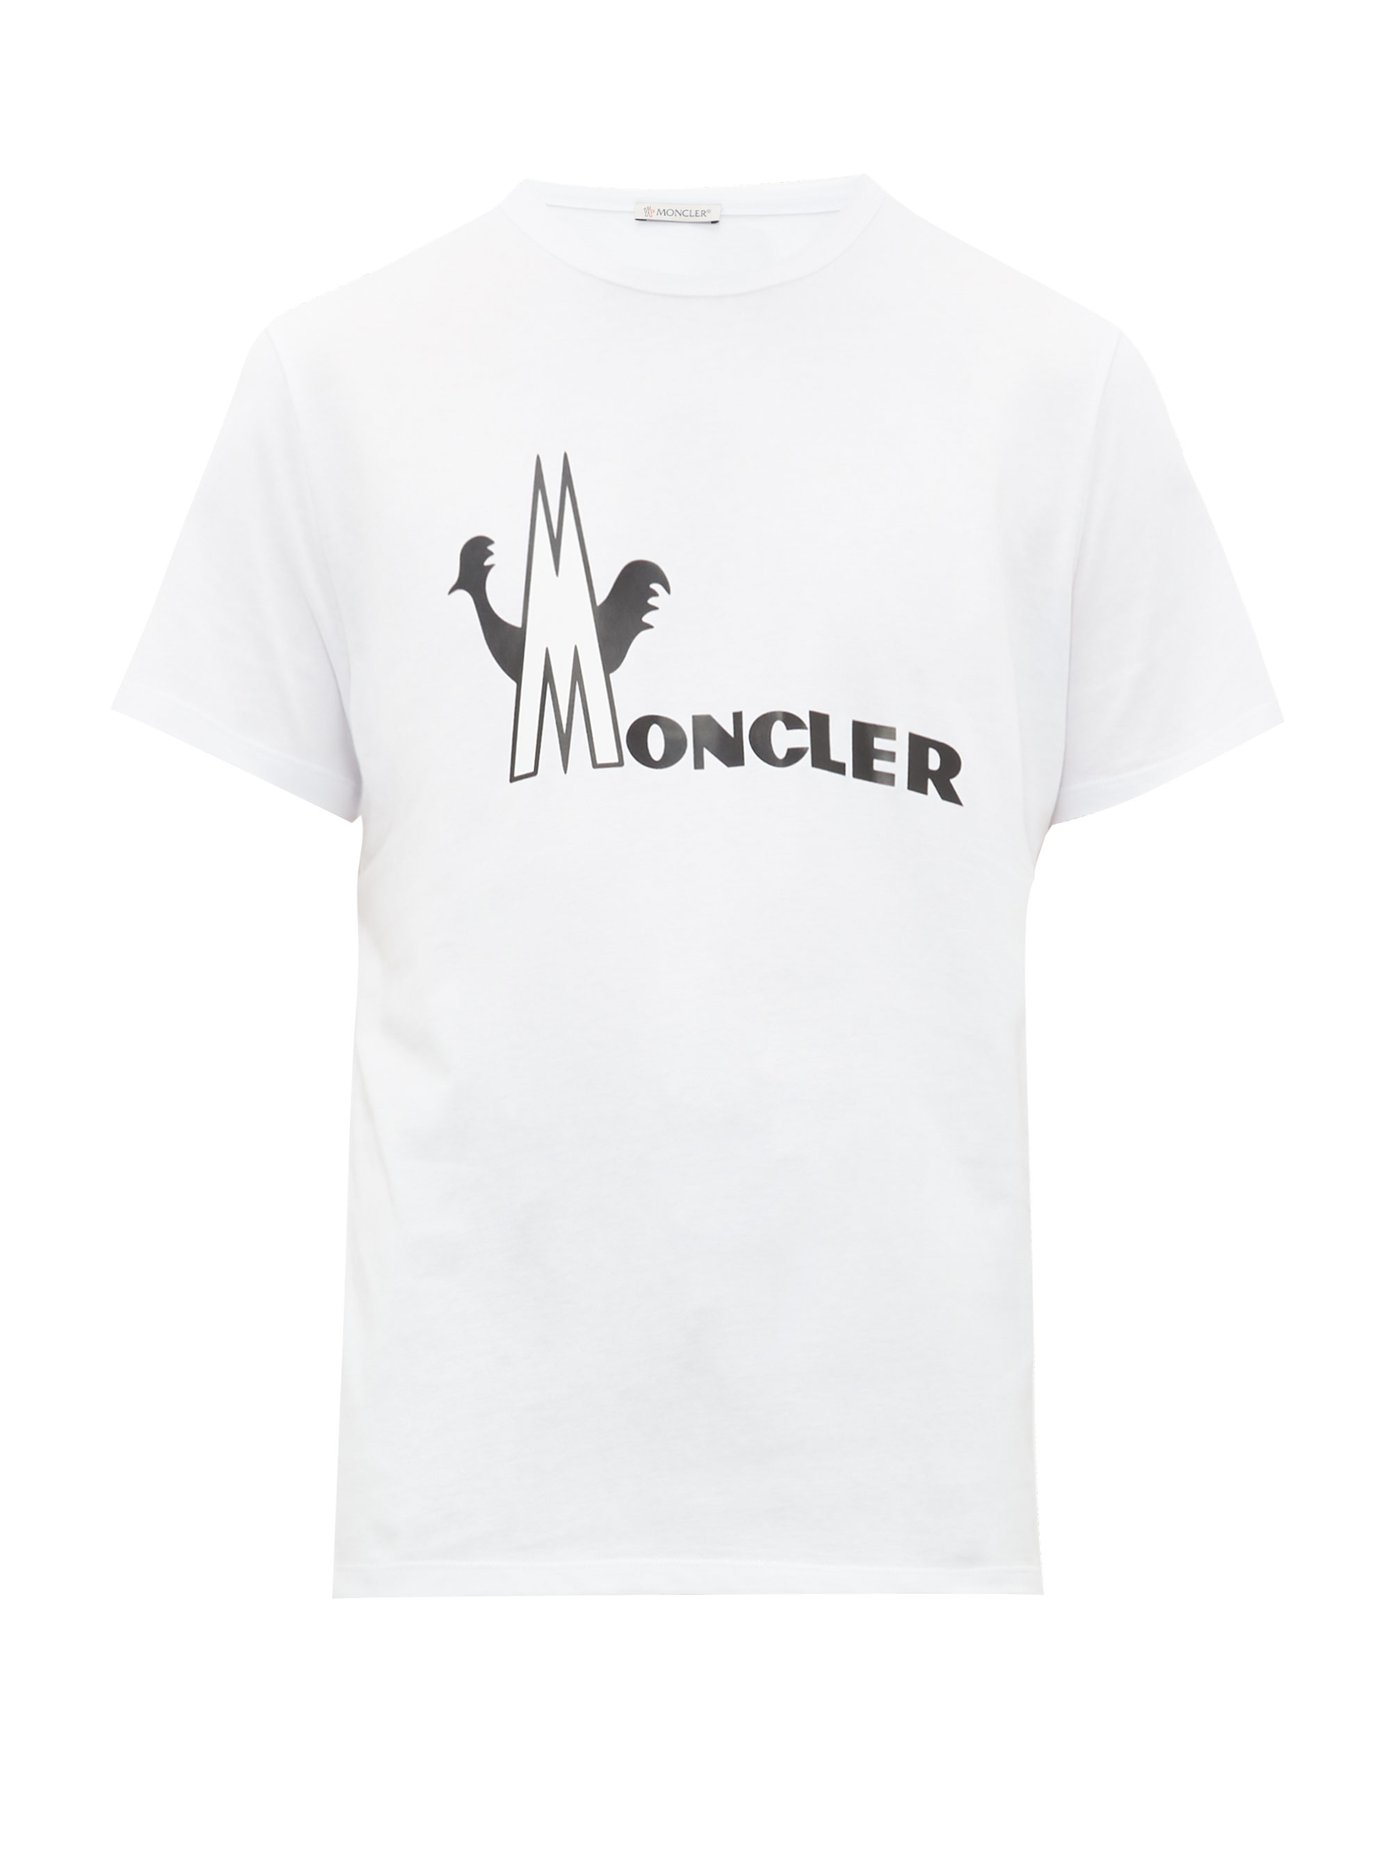 moncler x valentino t shirt